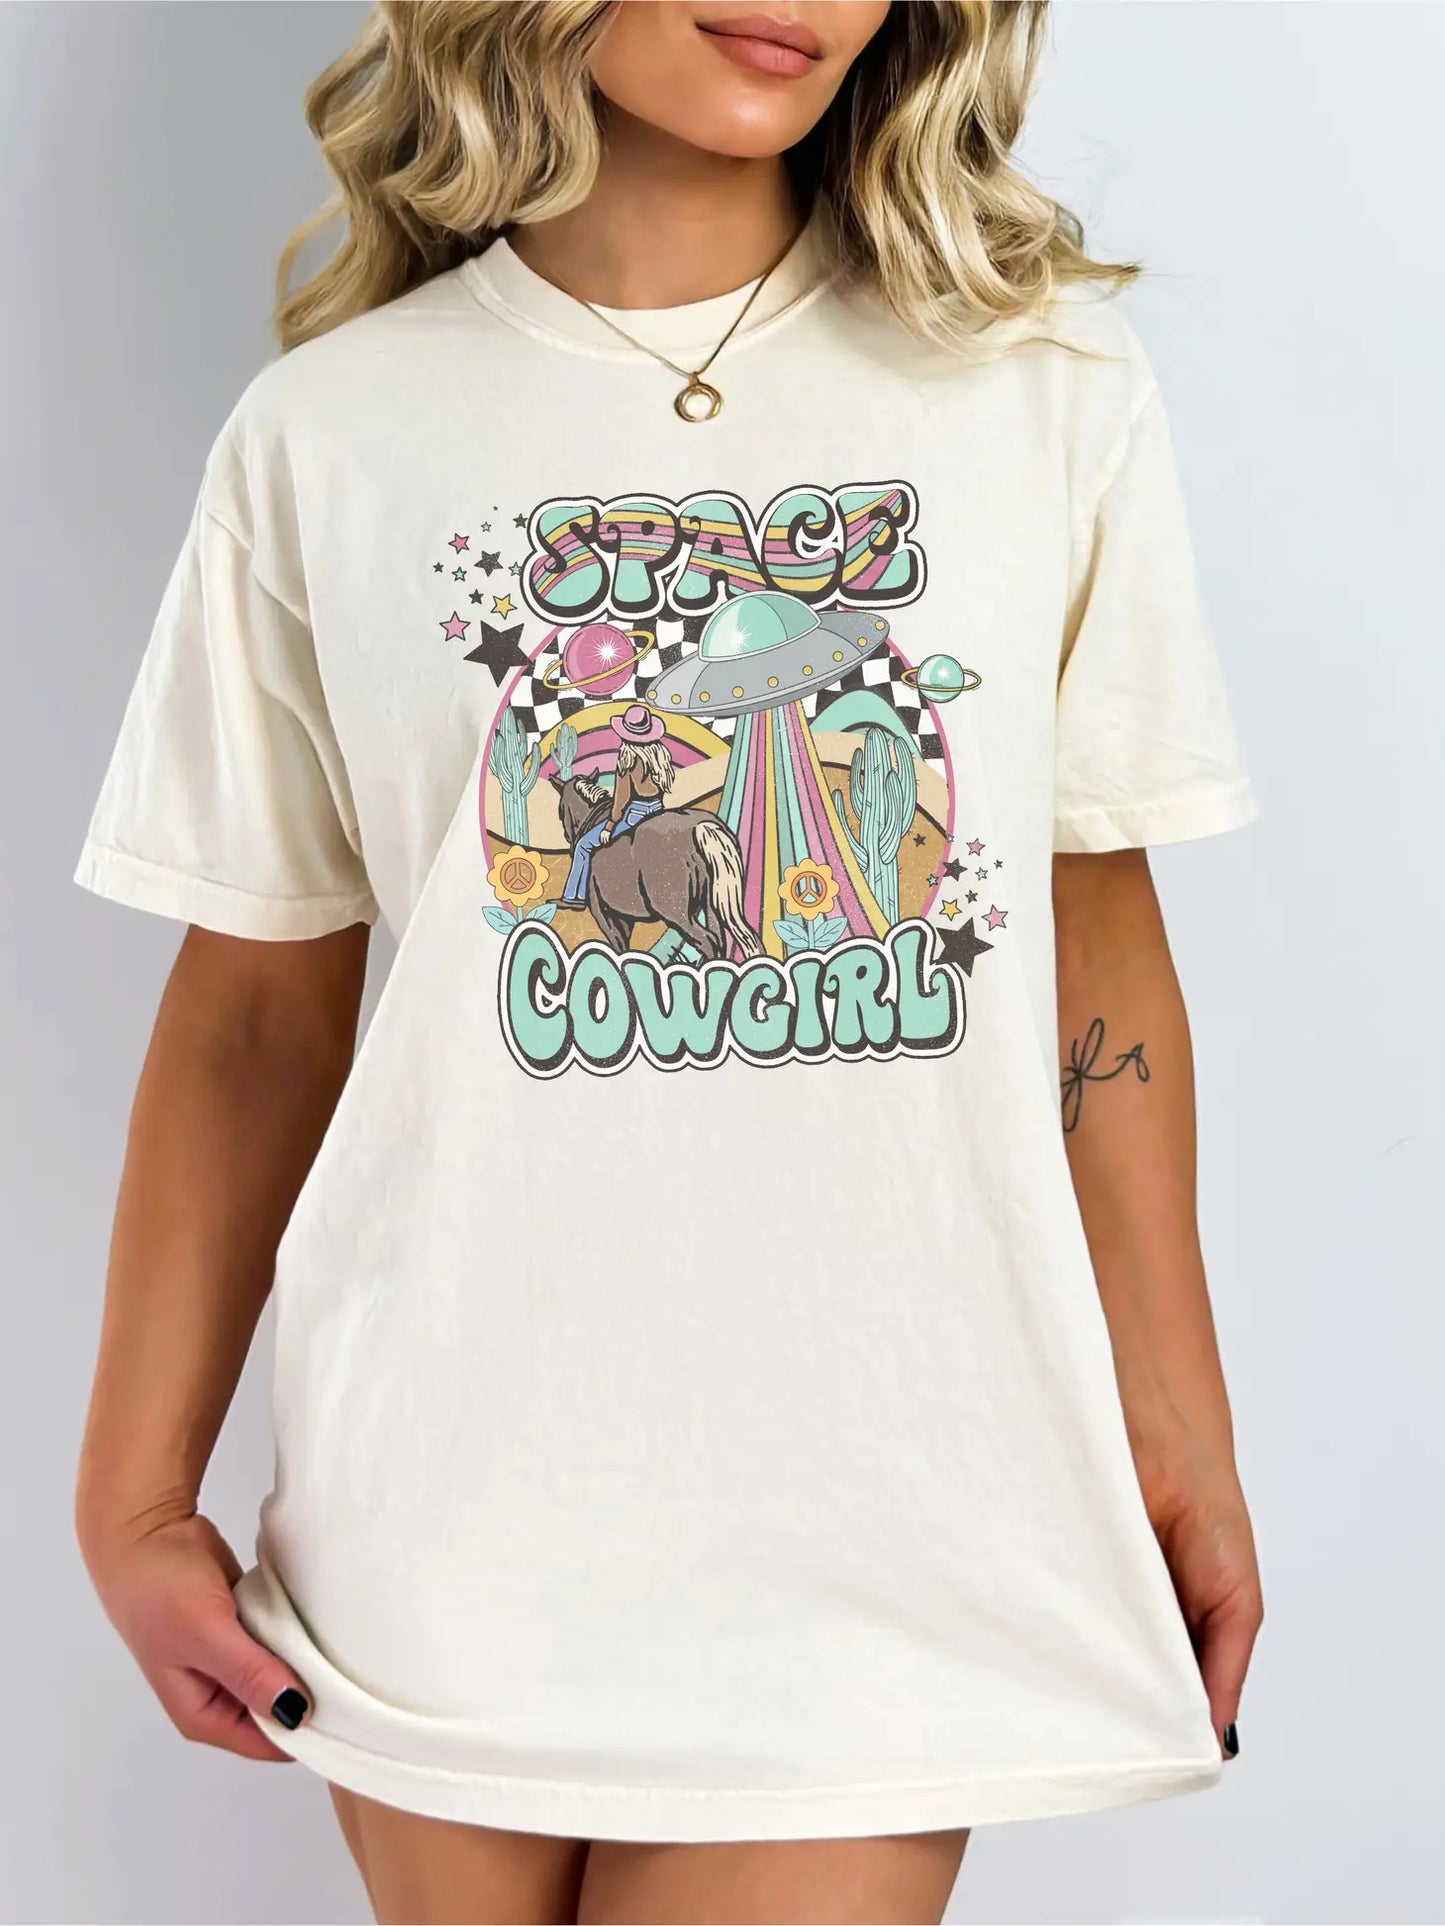 Space Cowgirl Tshirt